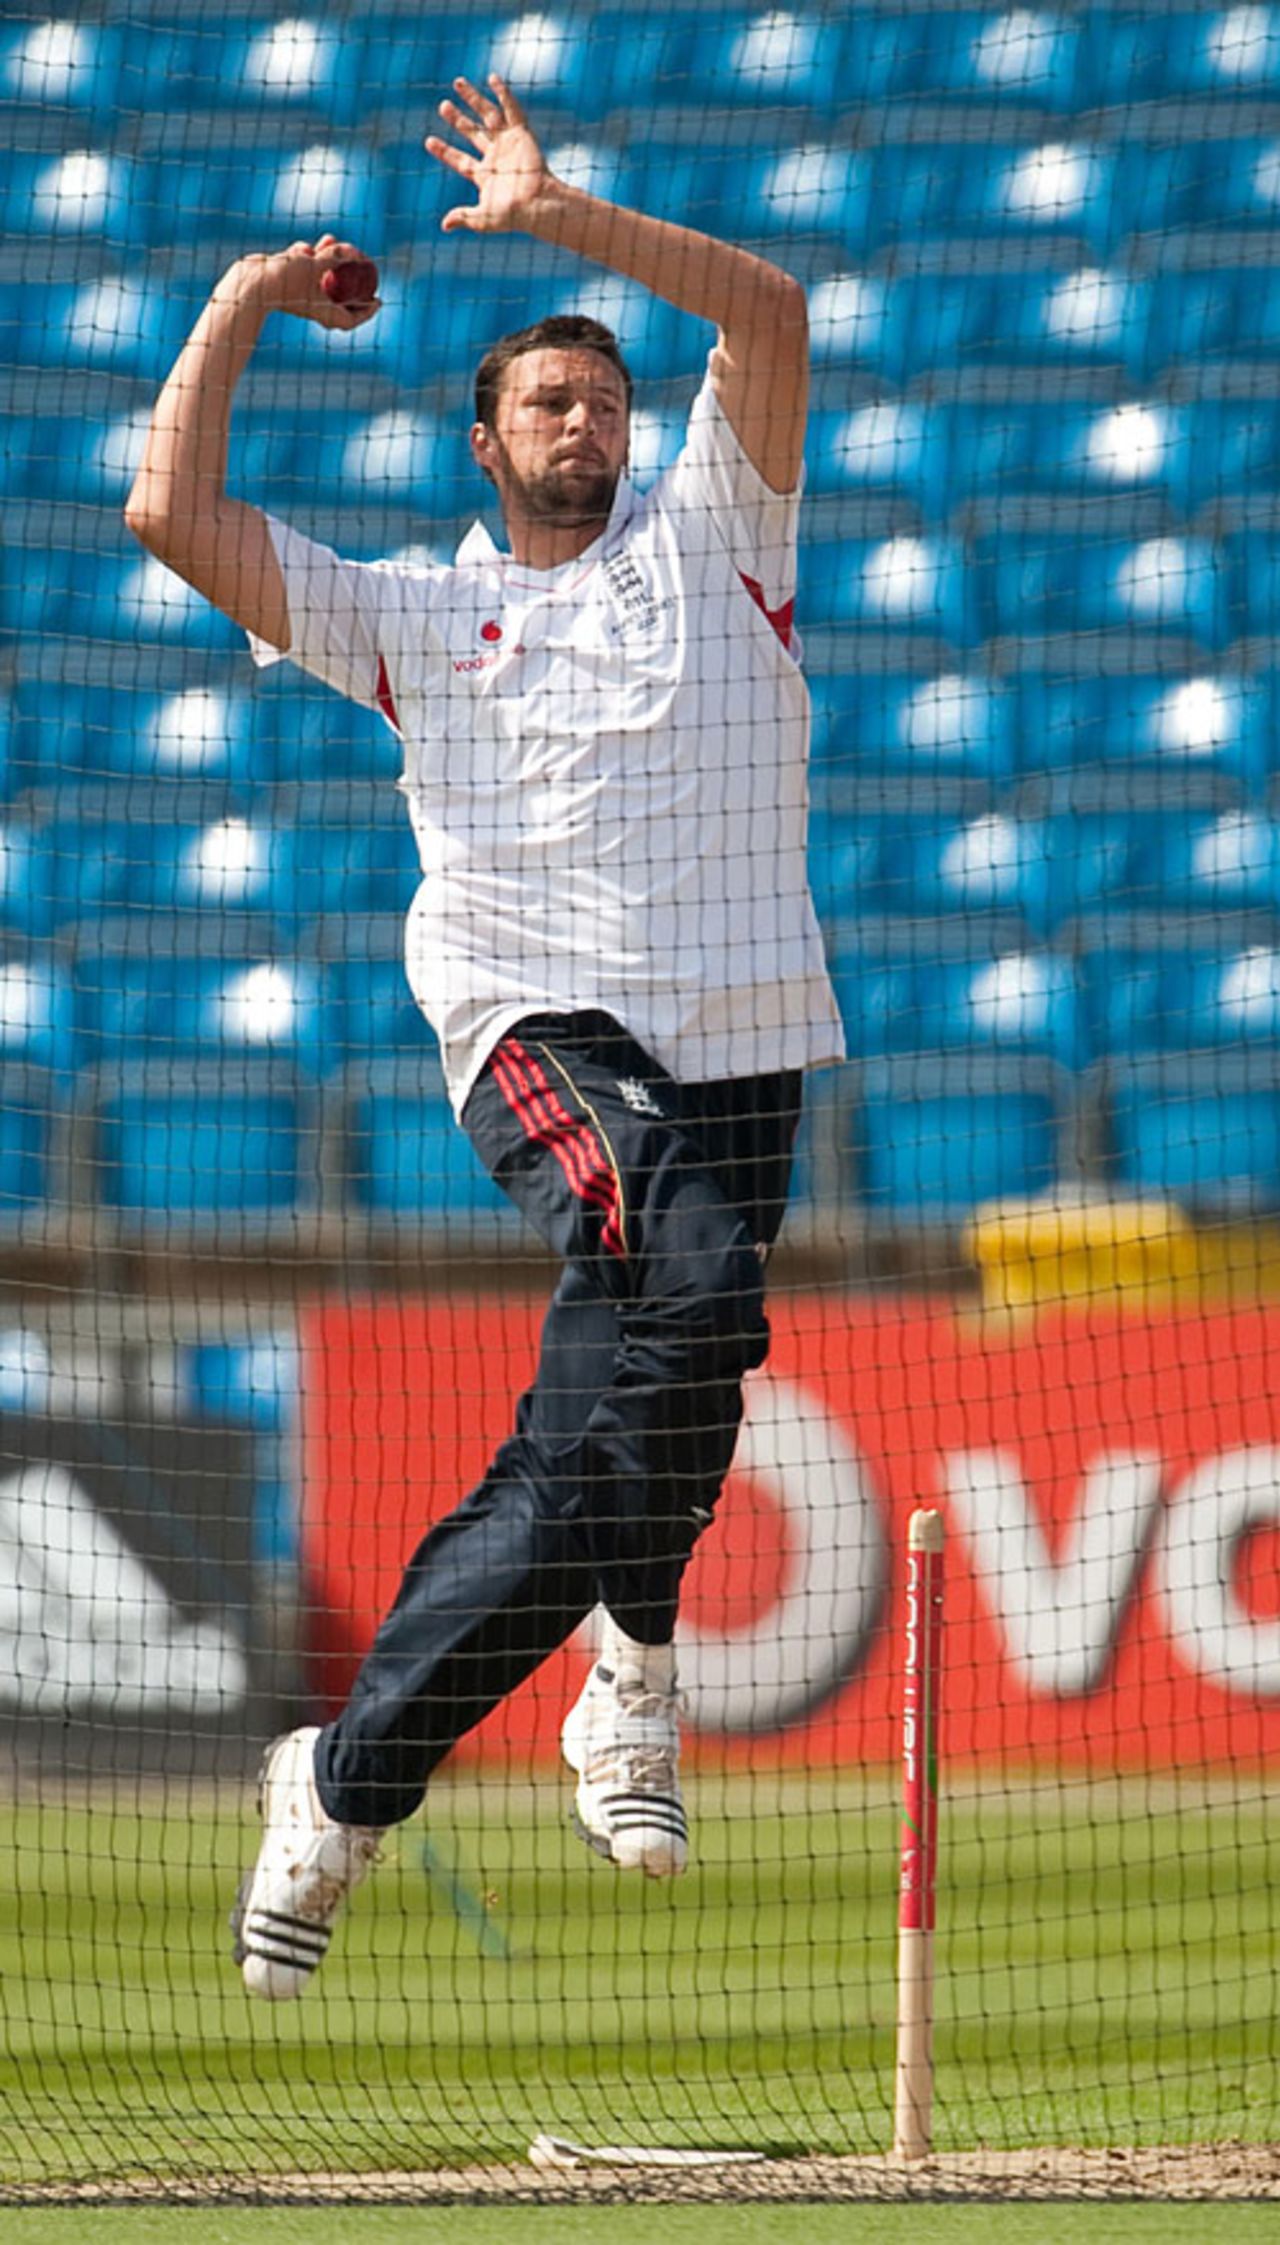 Steve Harmison loosens up in the nets, Headingley, August 6, 2009